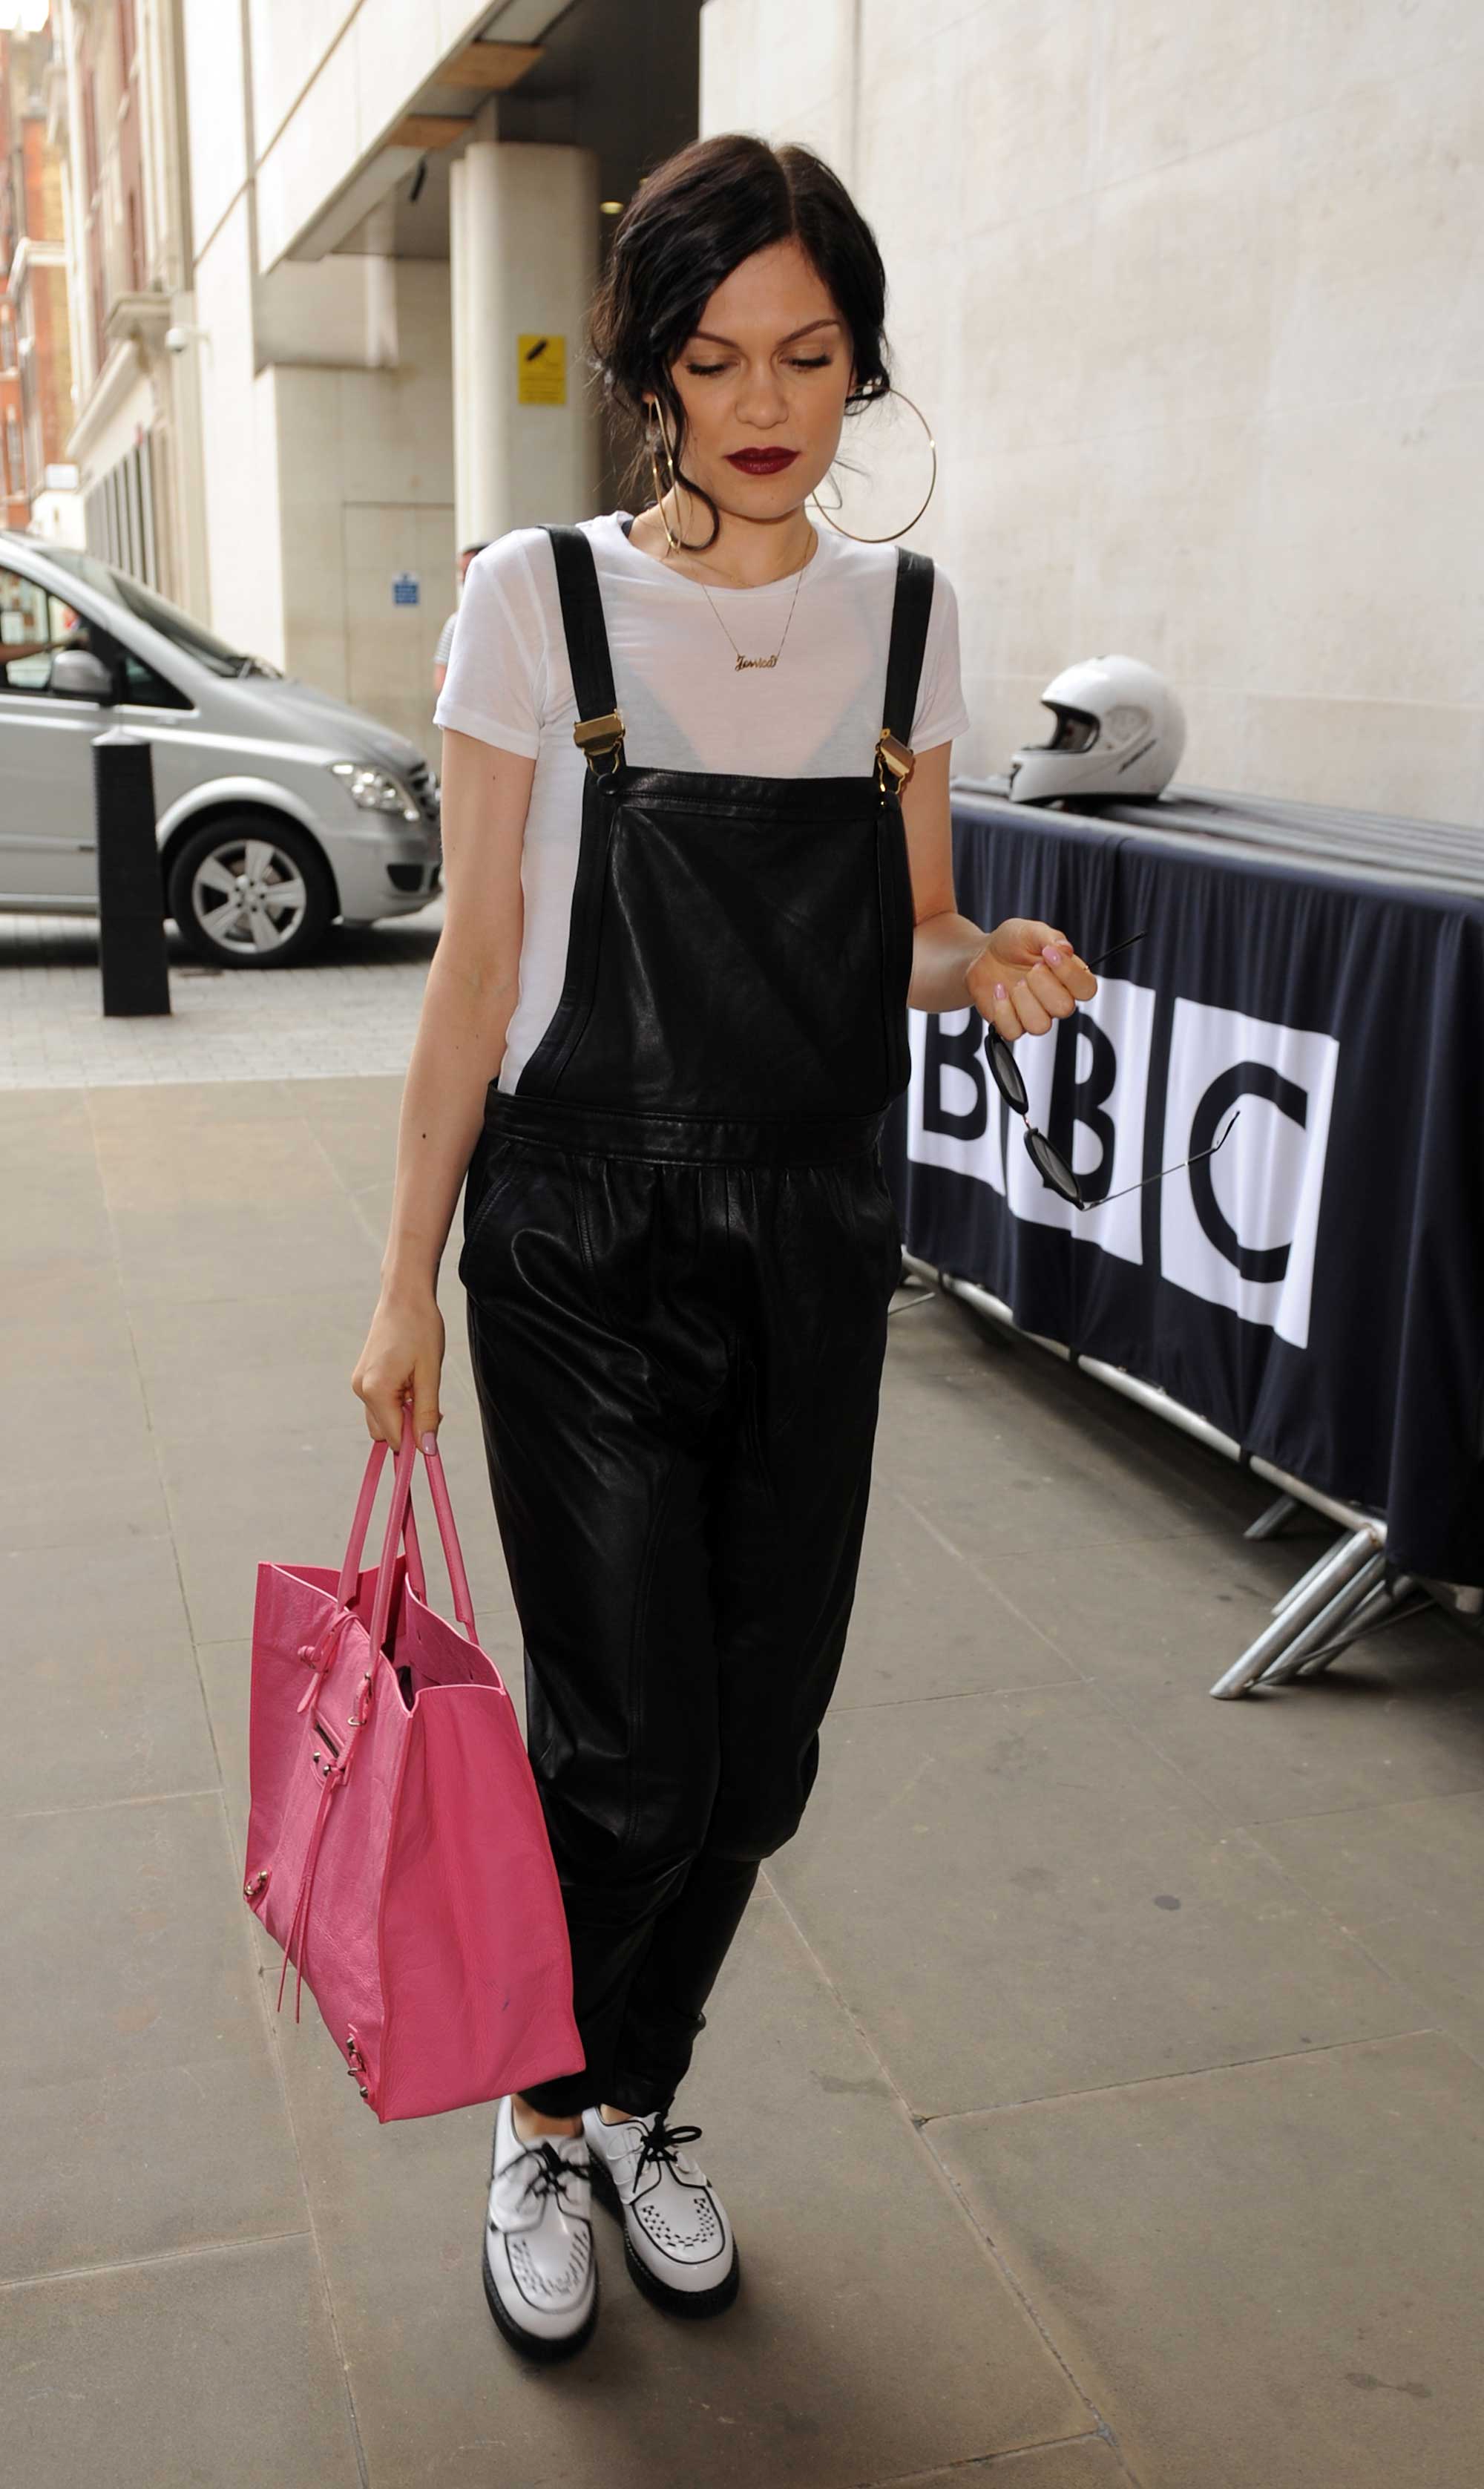 Jessie J at BBC Radio 1 studios in London